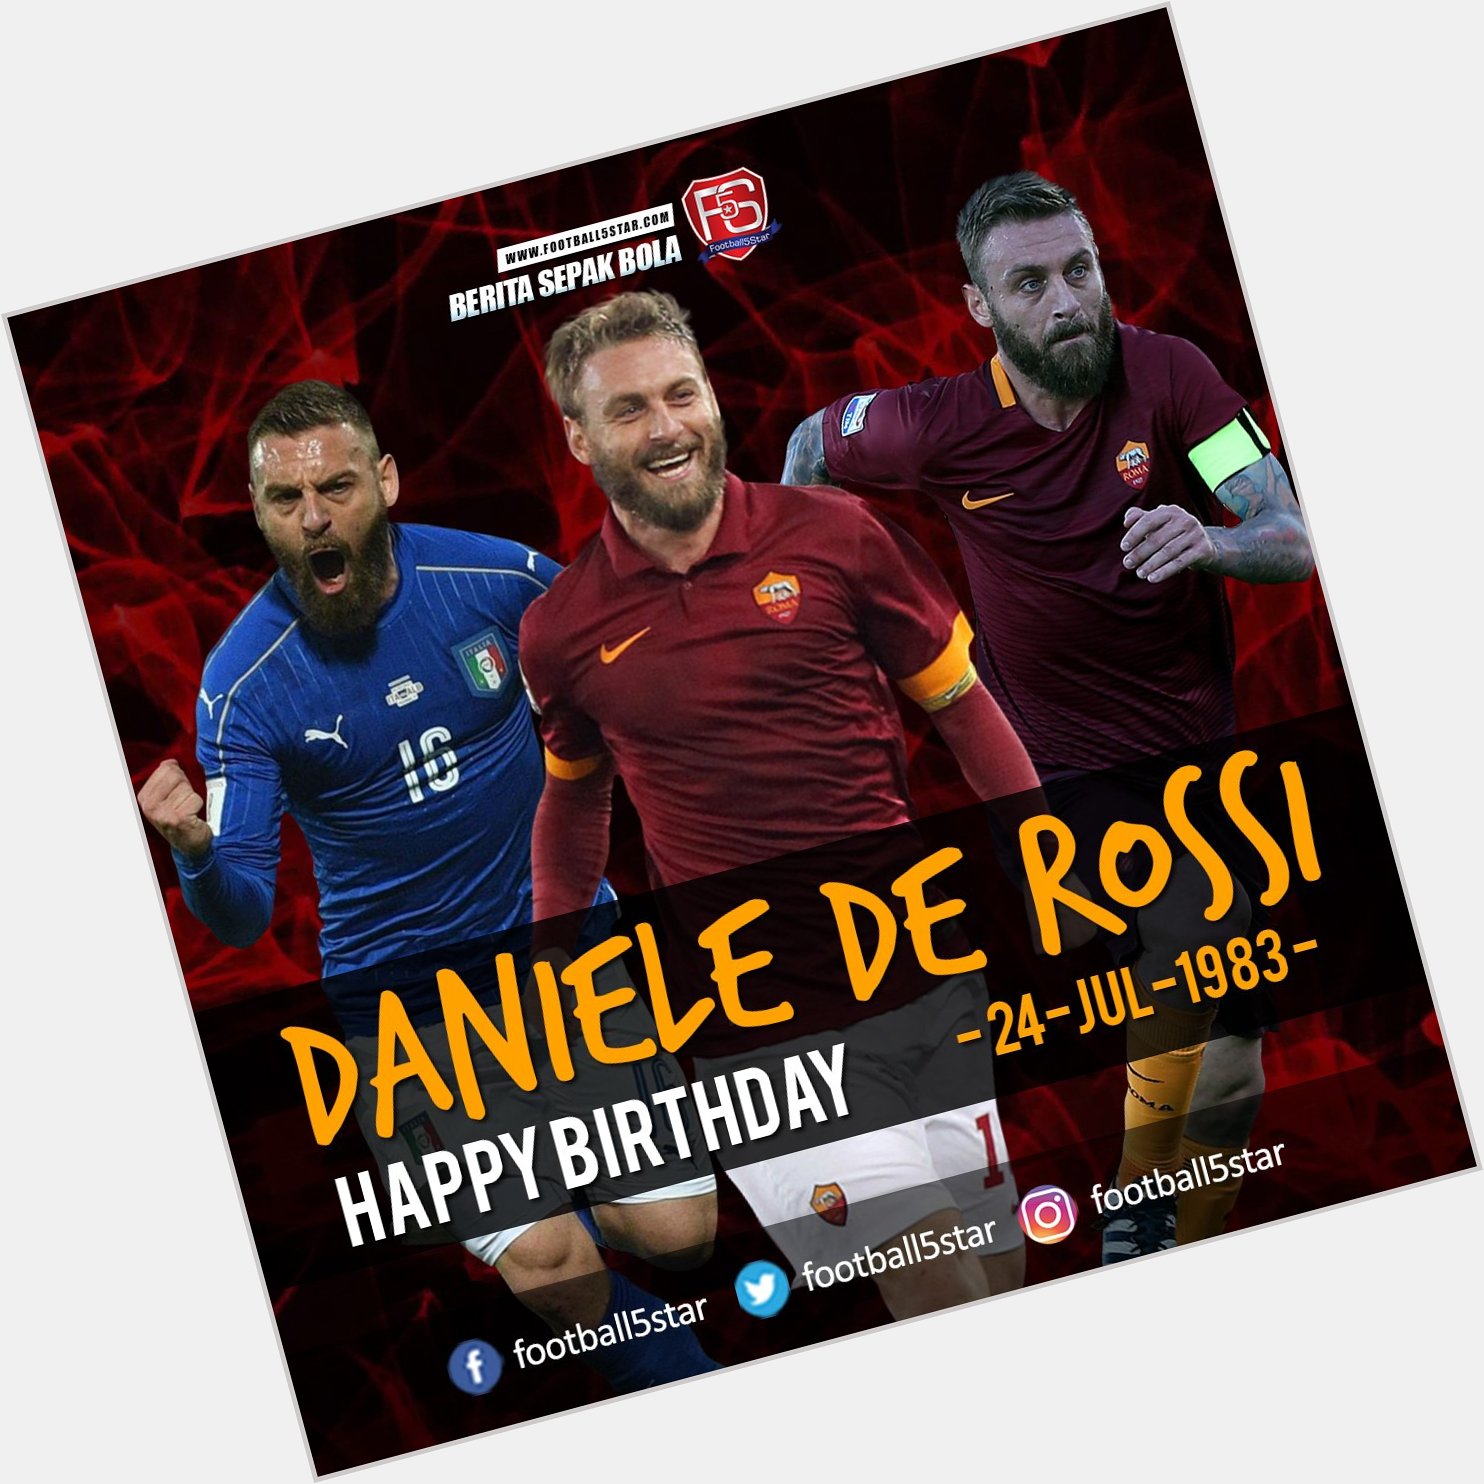 Happy Birthday Daniele De Rossi, 24-Jul-1983 .      